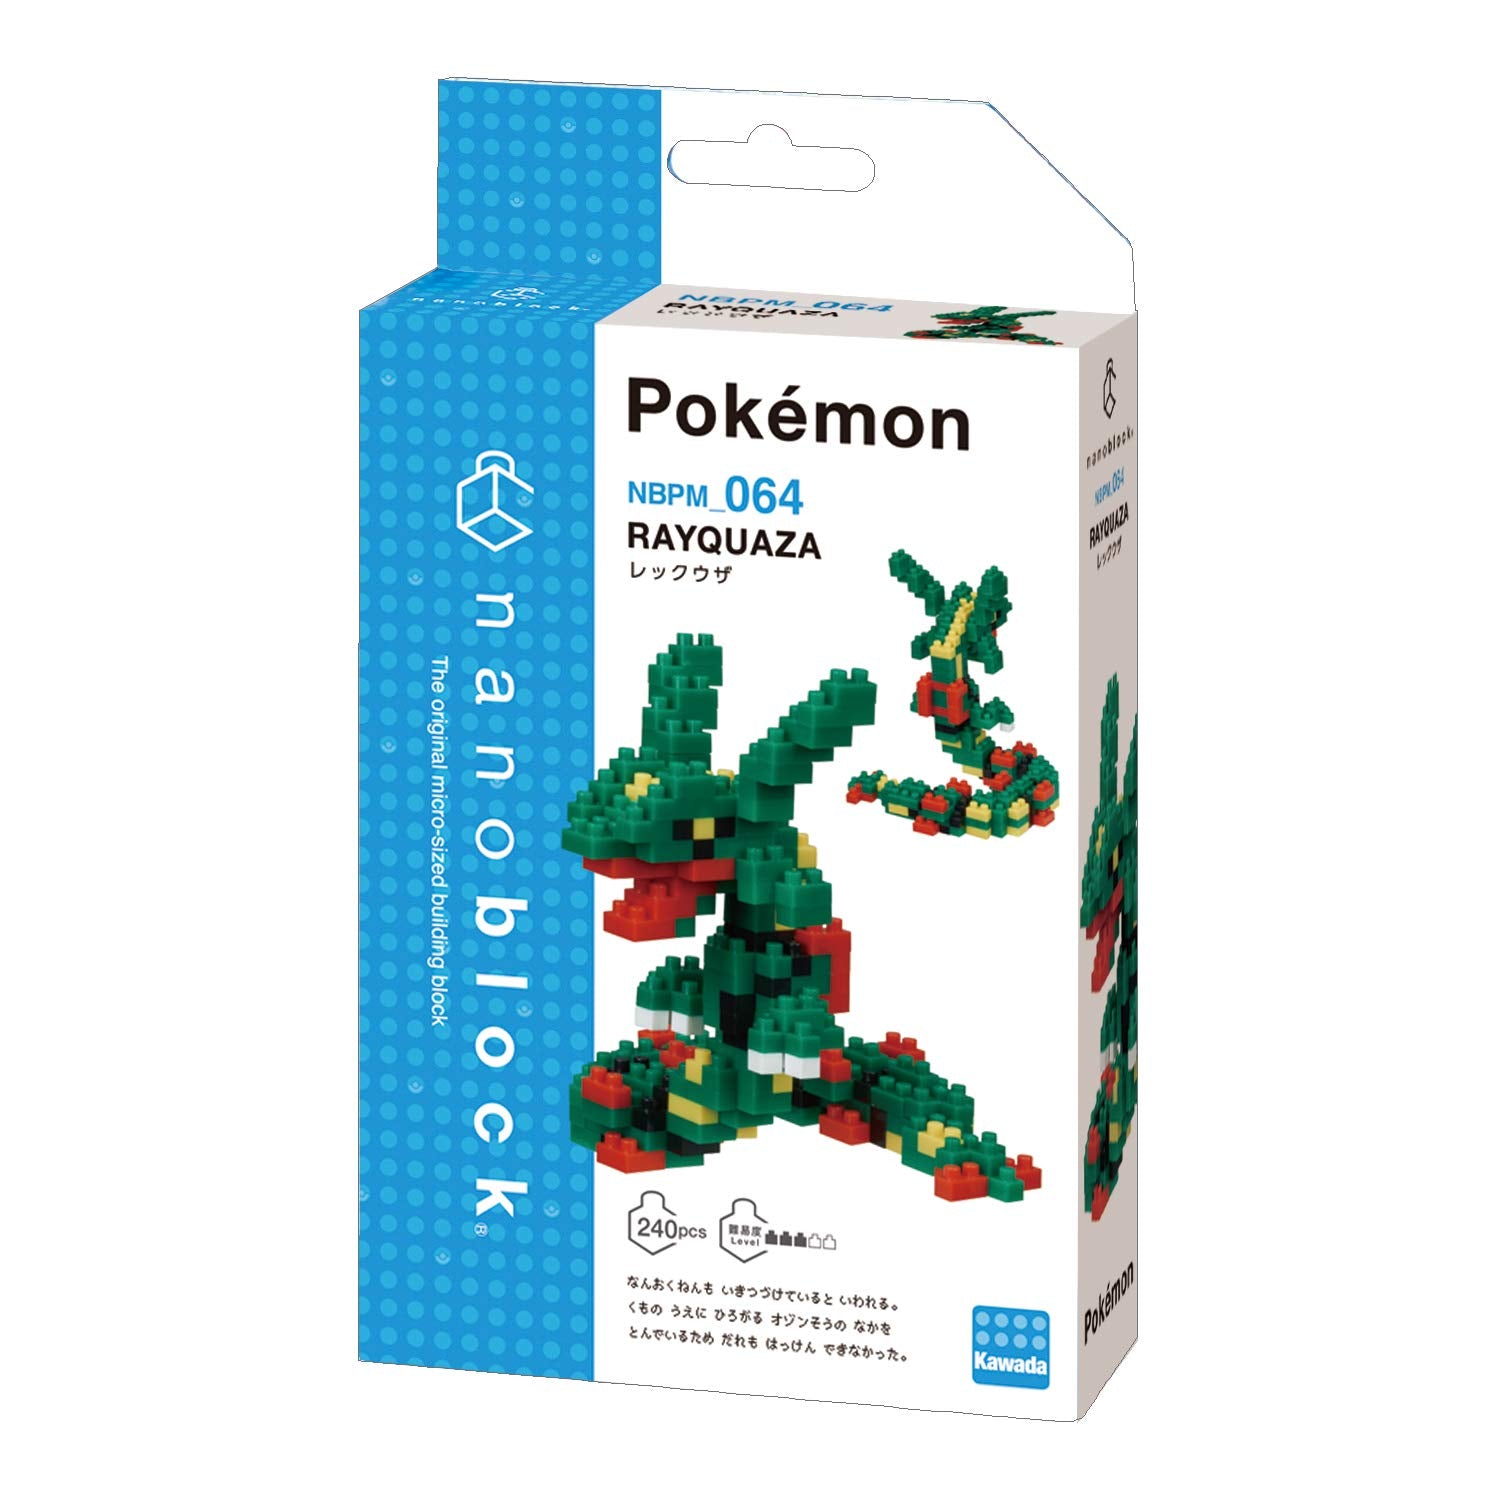 nanoblock - Rayquaza [Pokémon], Pokémon Series Building Kit